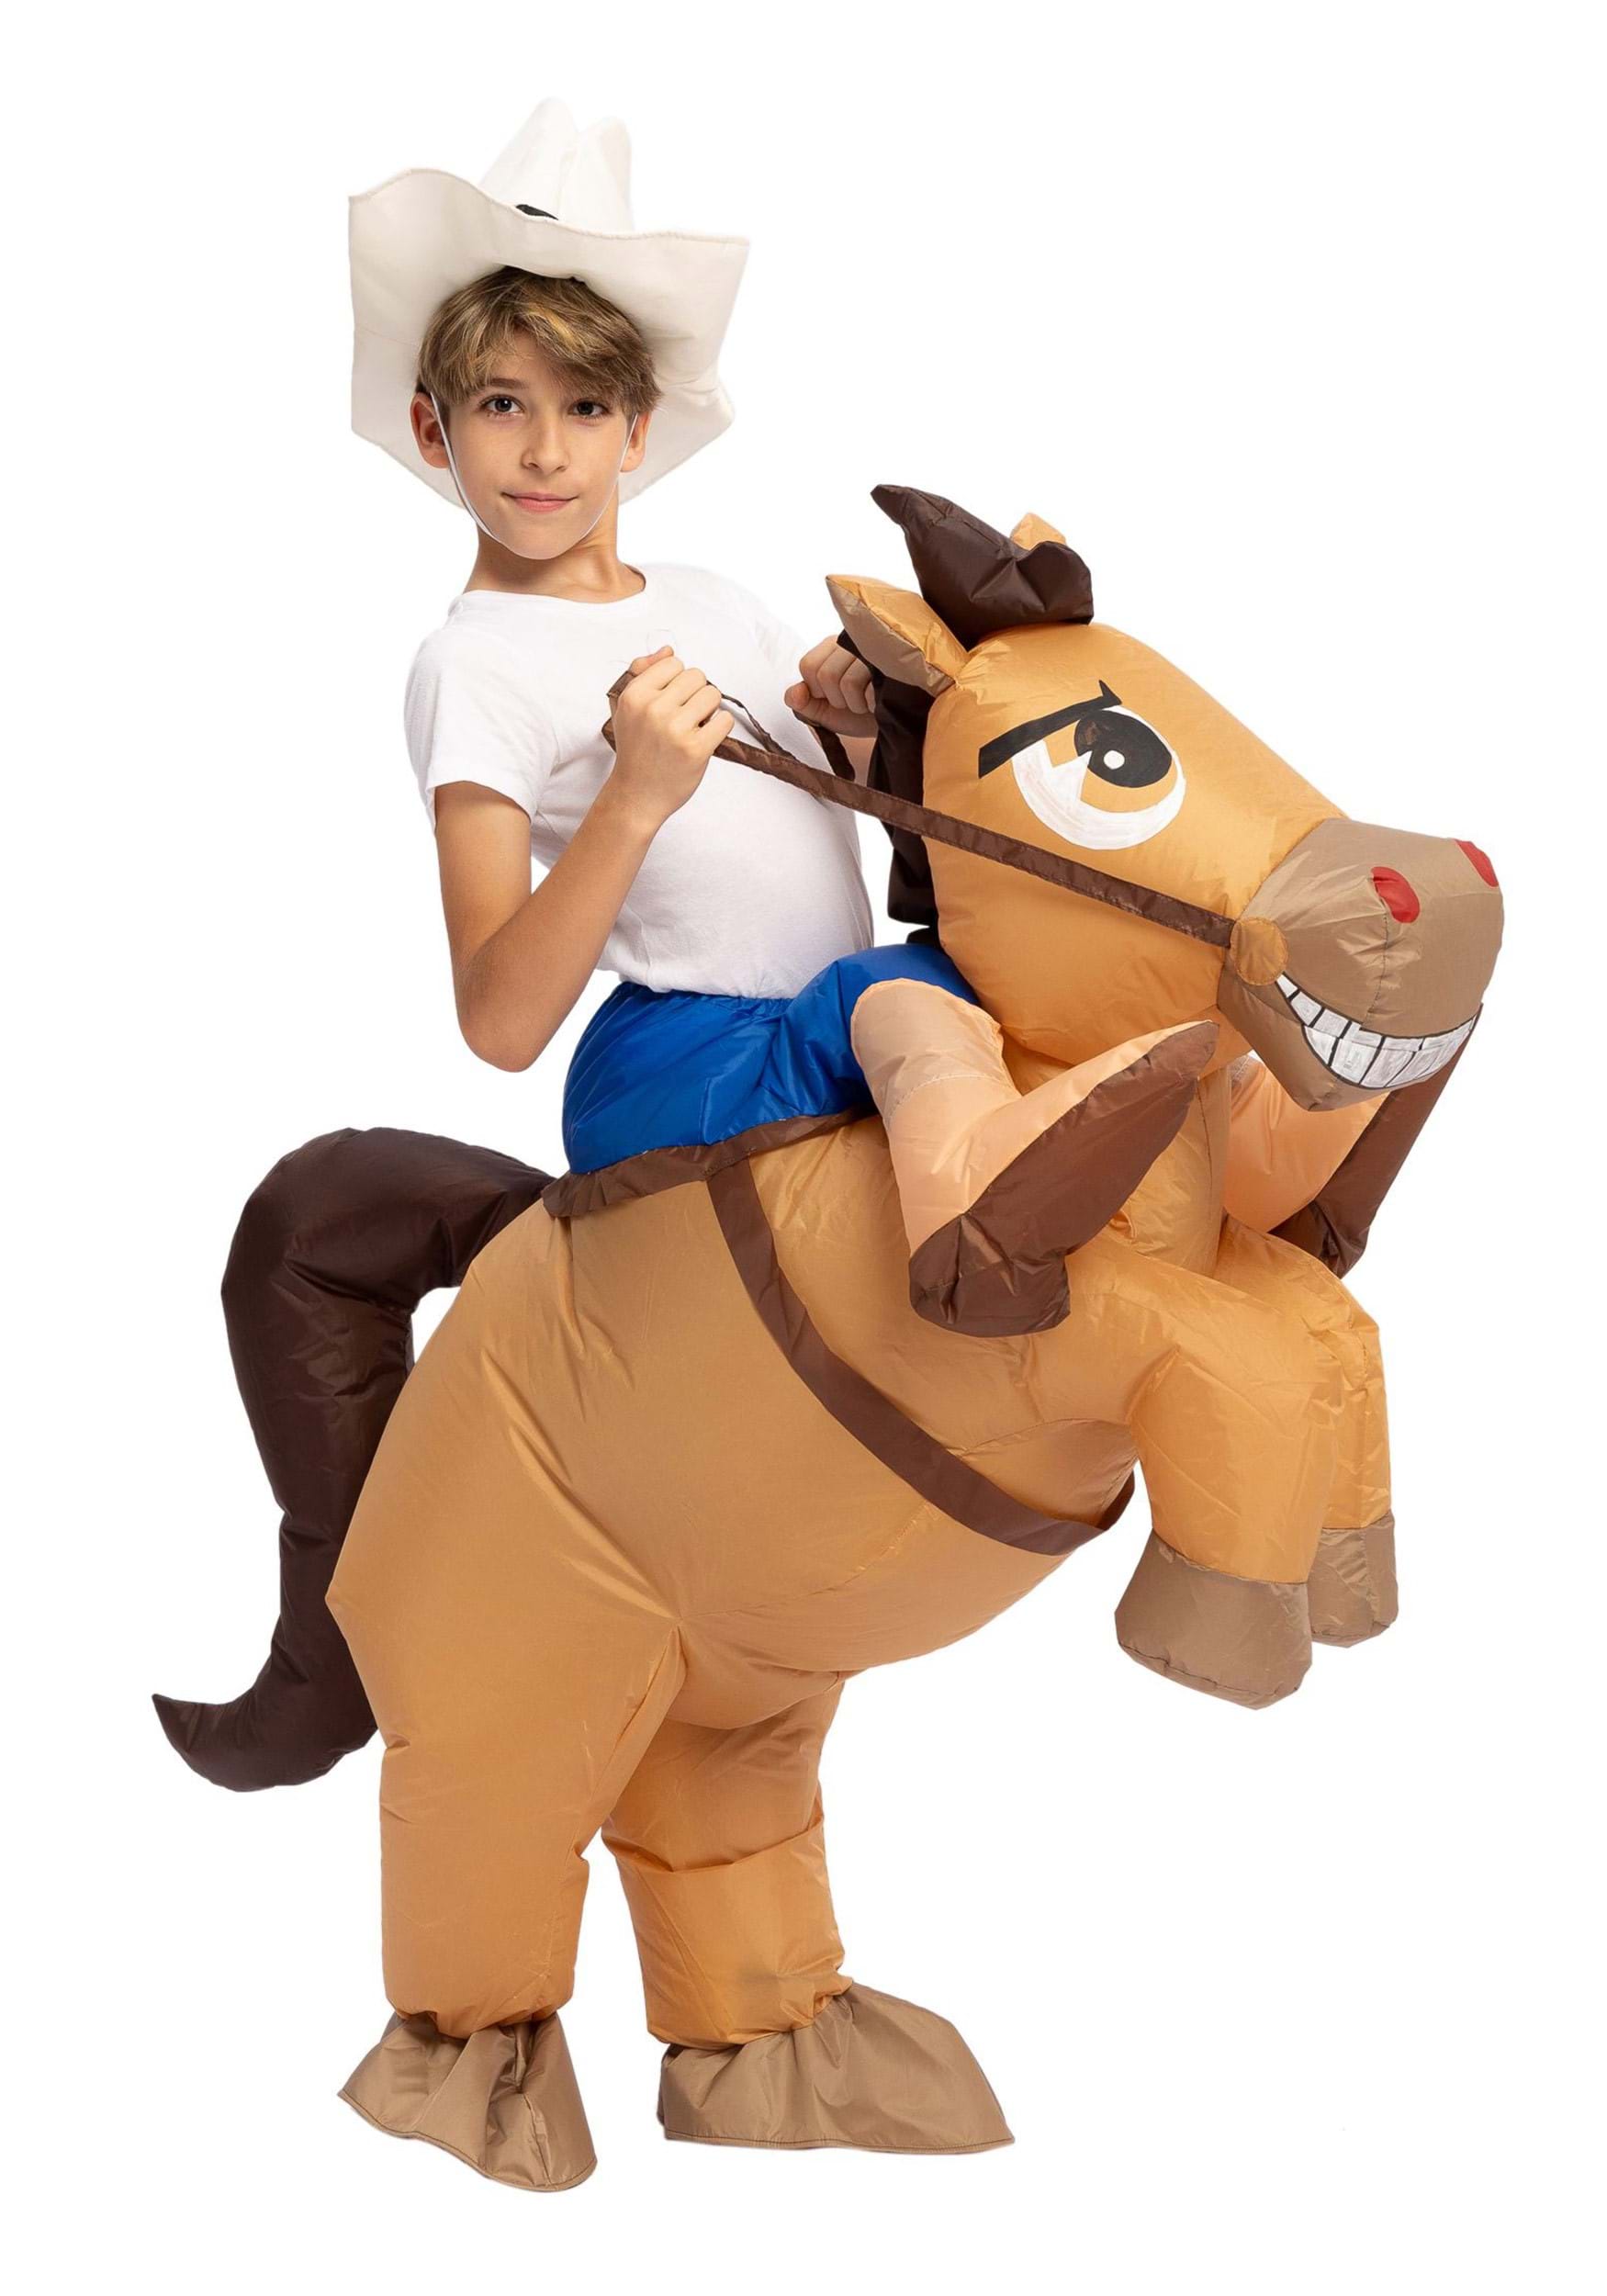 Photos - Fancy Dress Joyin Inflatable Horse Ride-On Costume for Children Blue/Brown/Bei